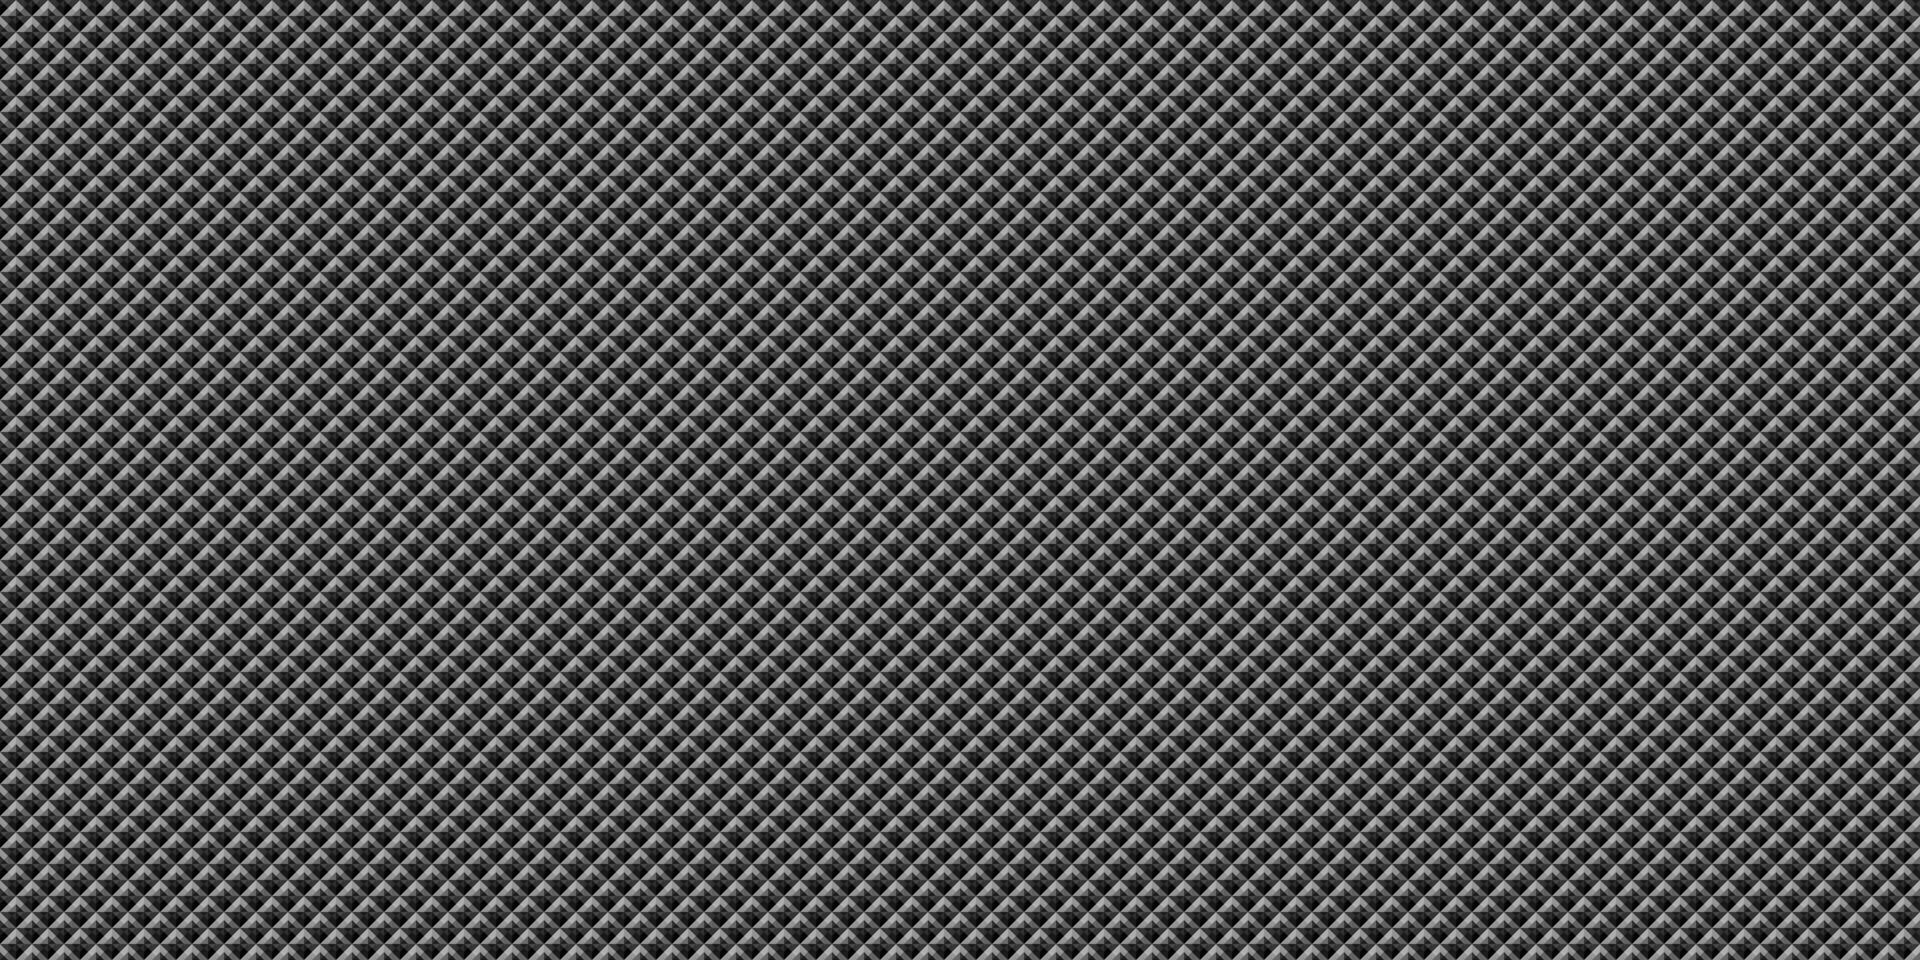 abstrato Preto e branco minimalista geométrico fundo vetor